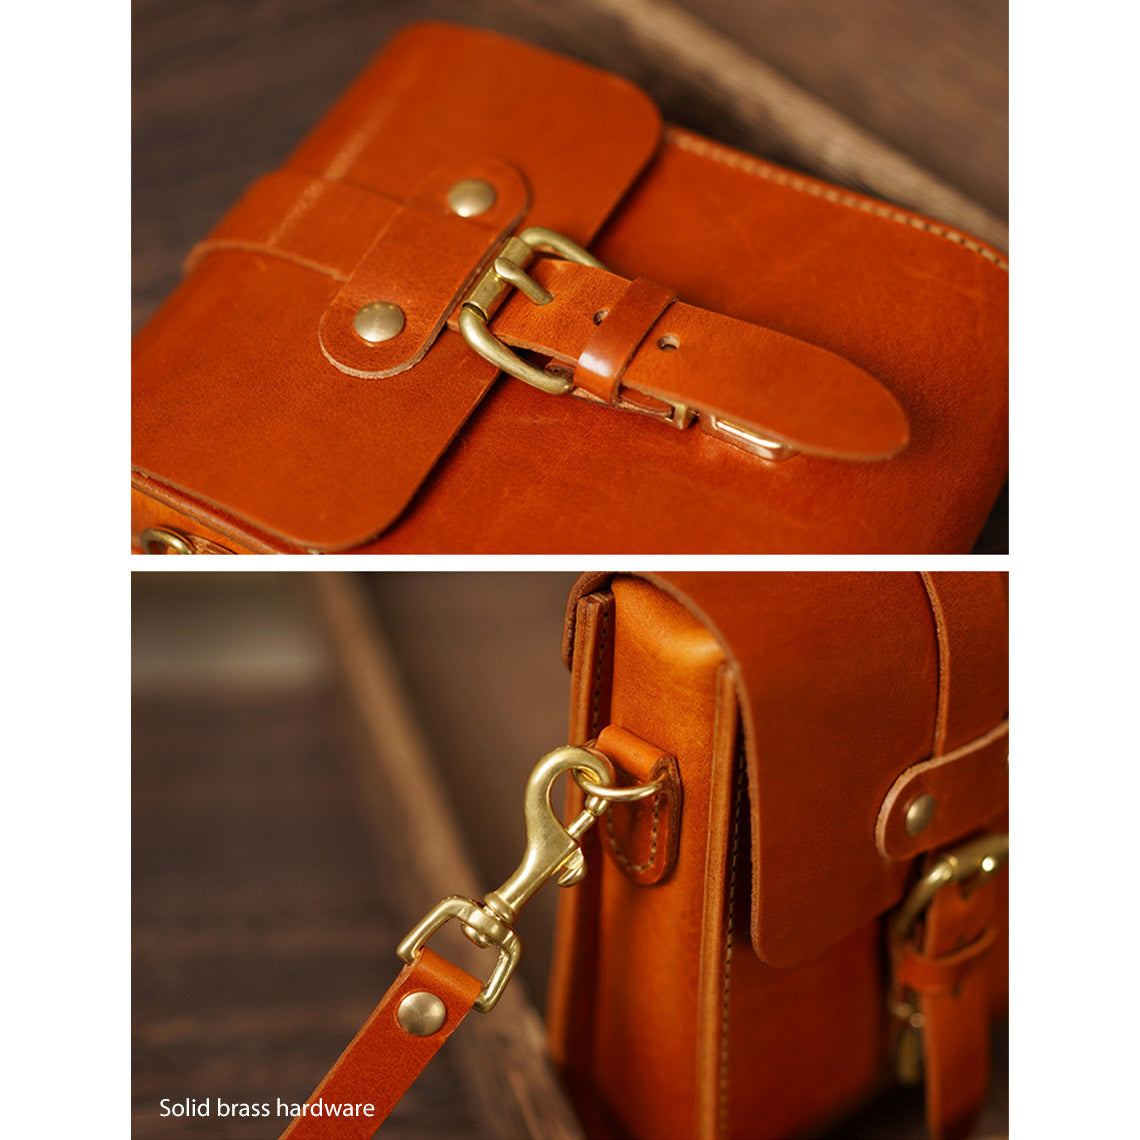 POPSEWING® Full Grain Leather Vintage Phone Bag DIY Kits